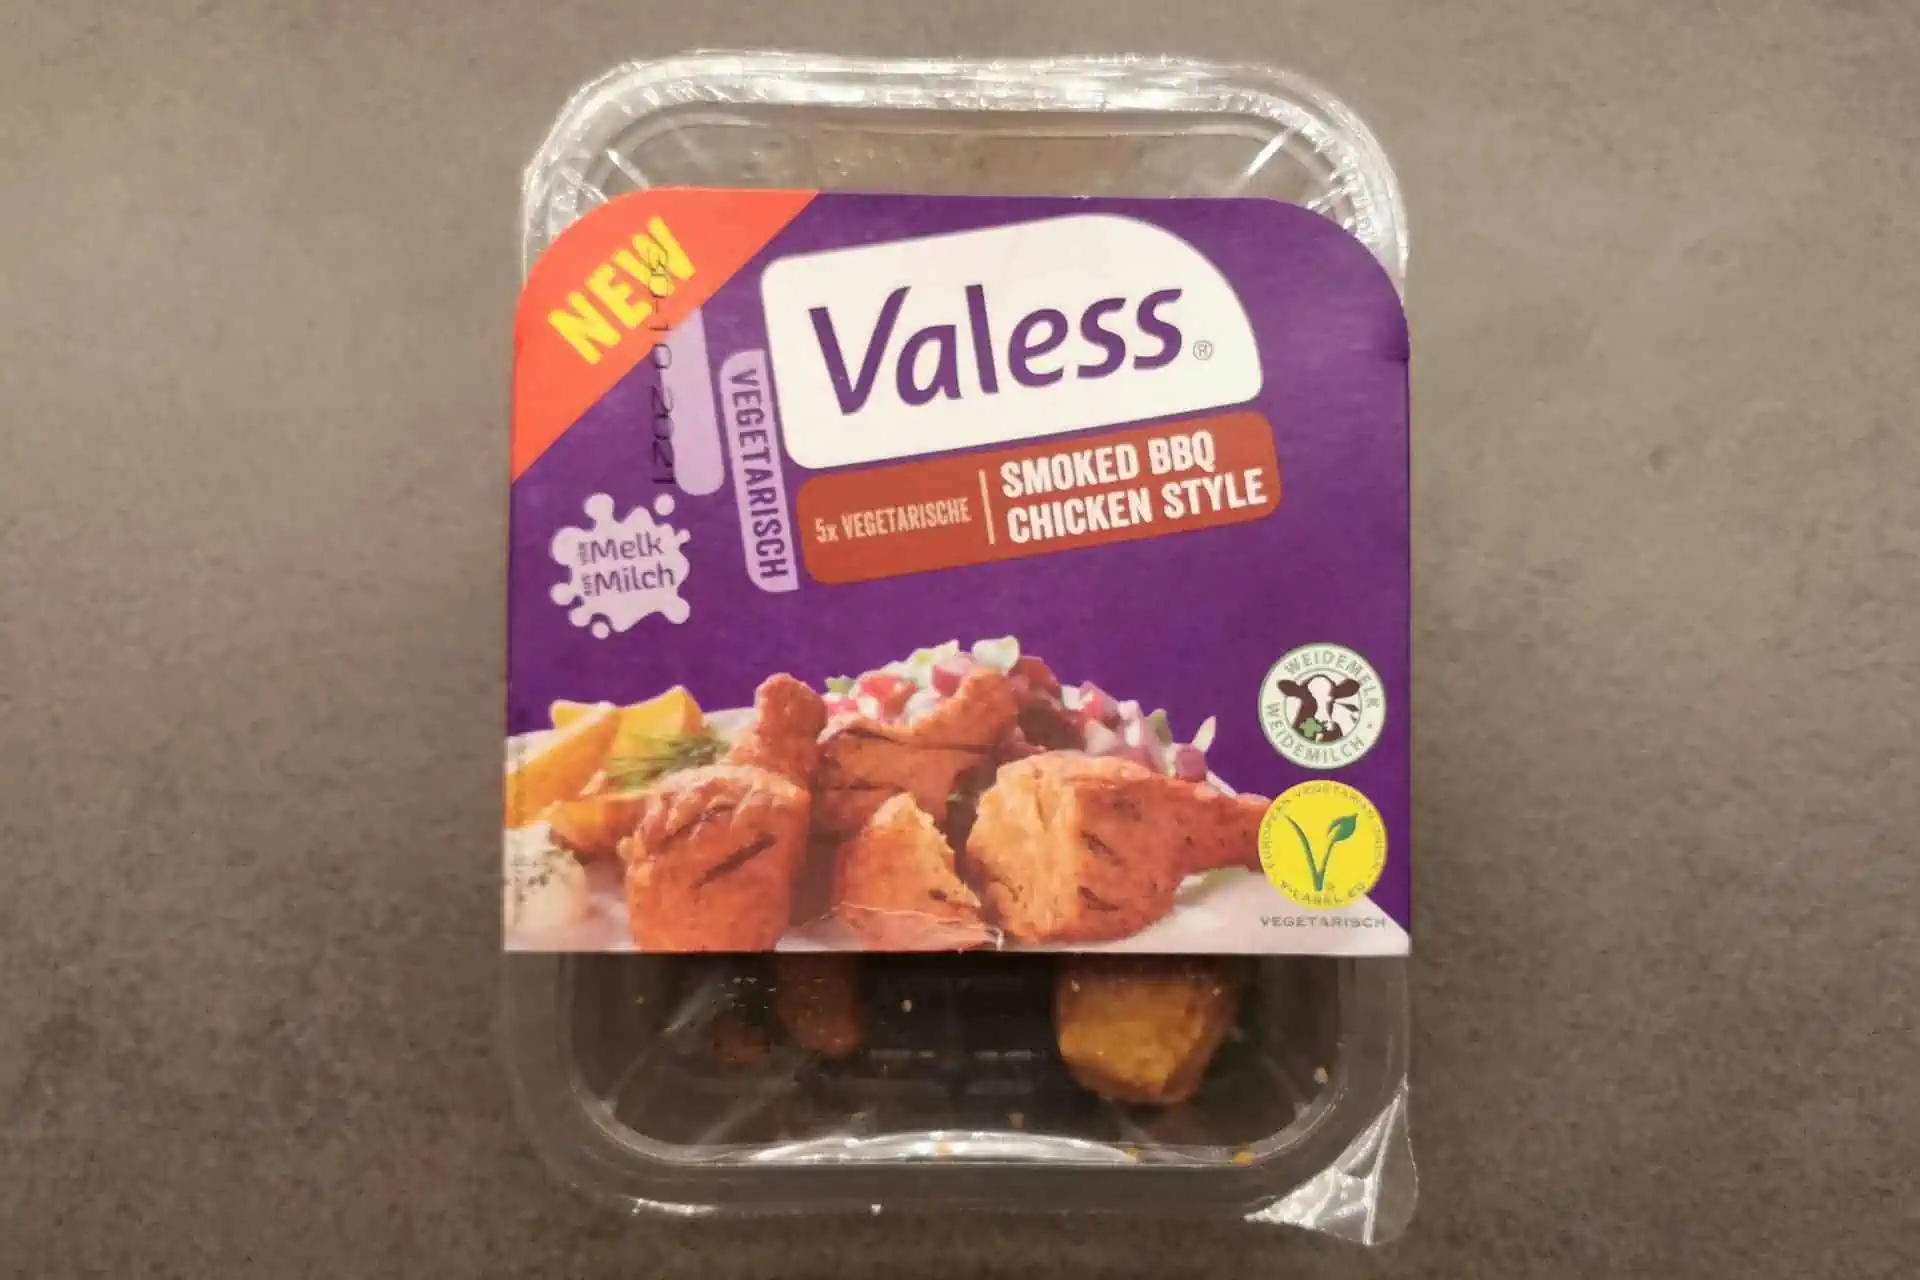 Valess: Smoked BBQ Chicken Style